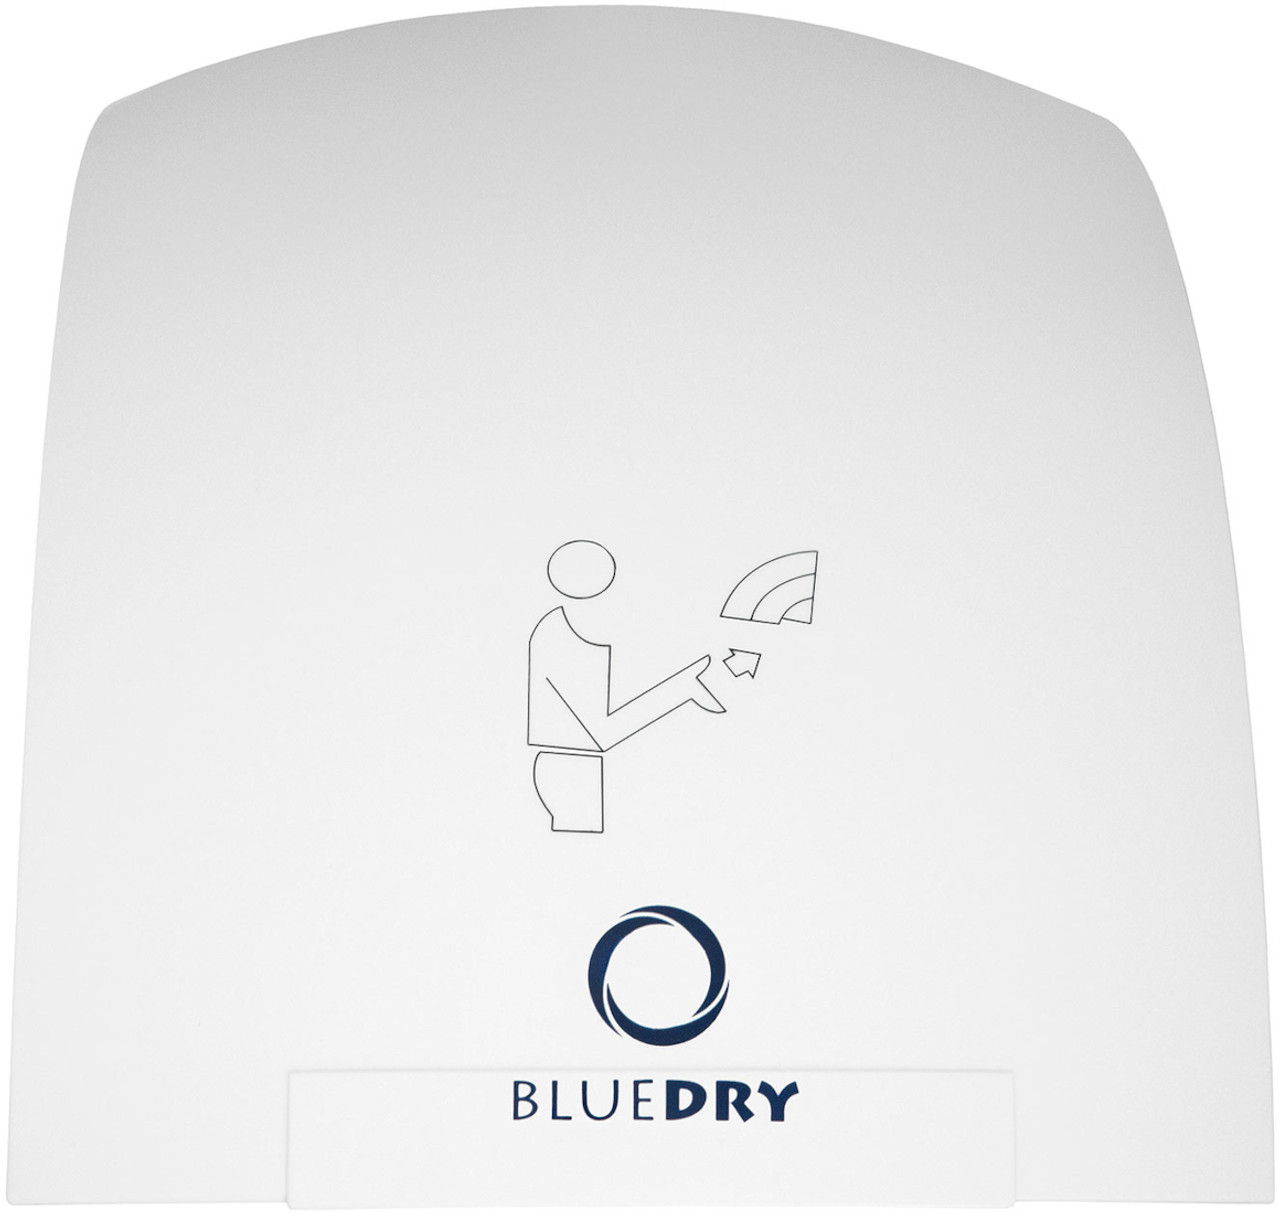 HD-BD1053W - BlueDry Junior Hand Dryer - White - Front